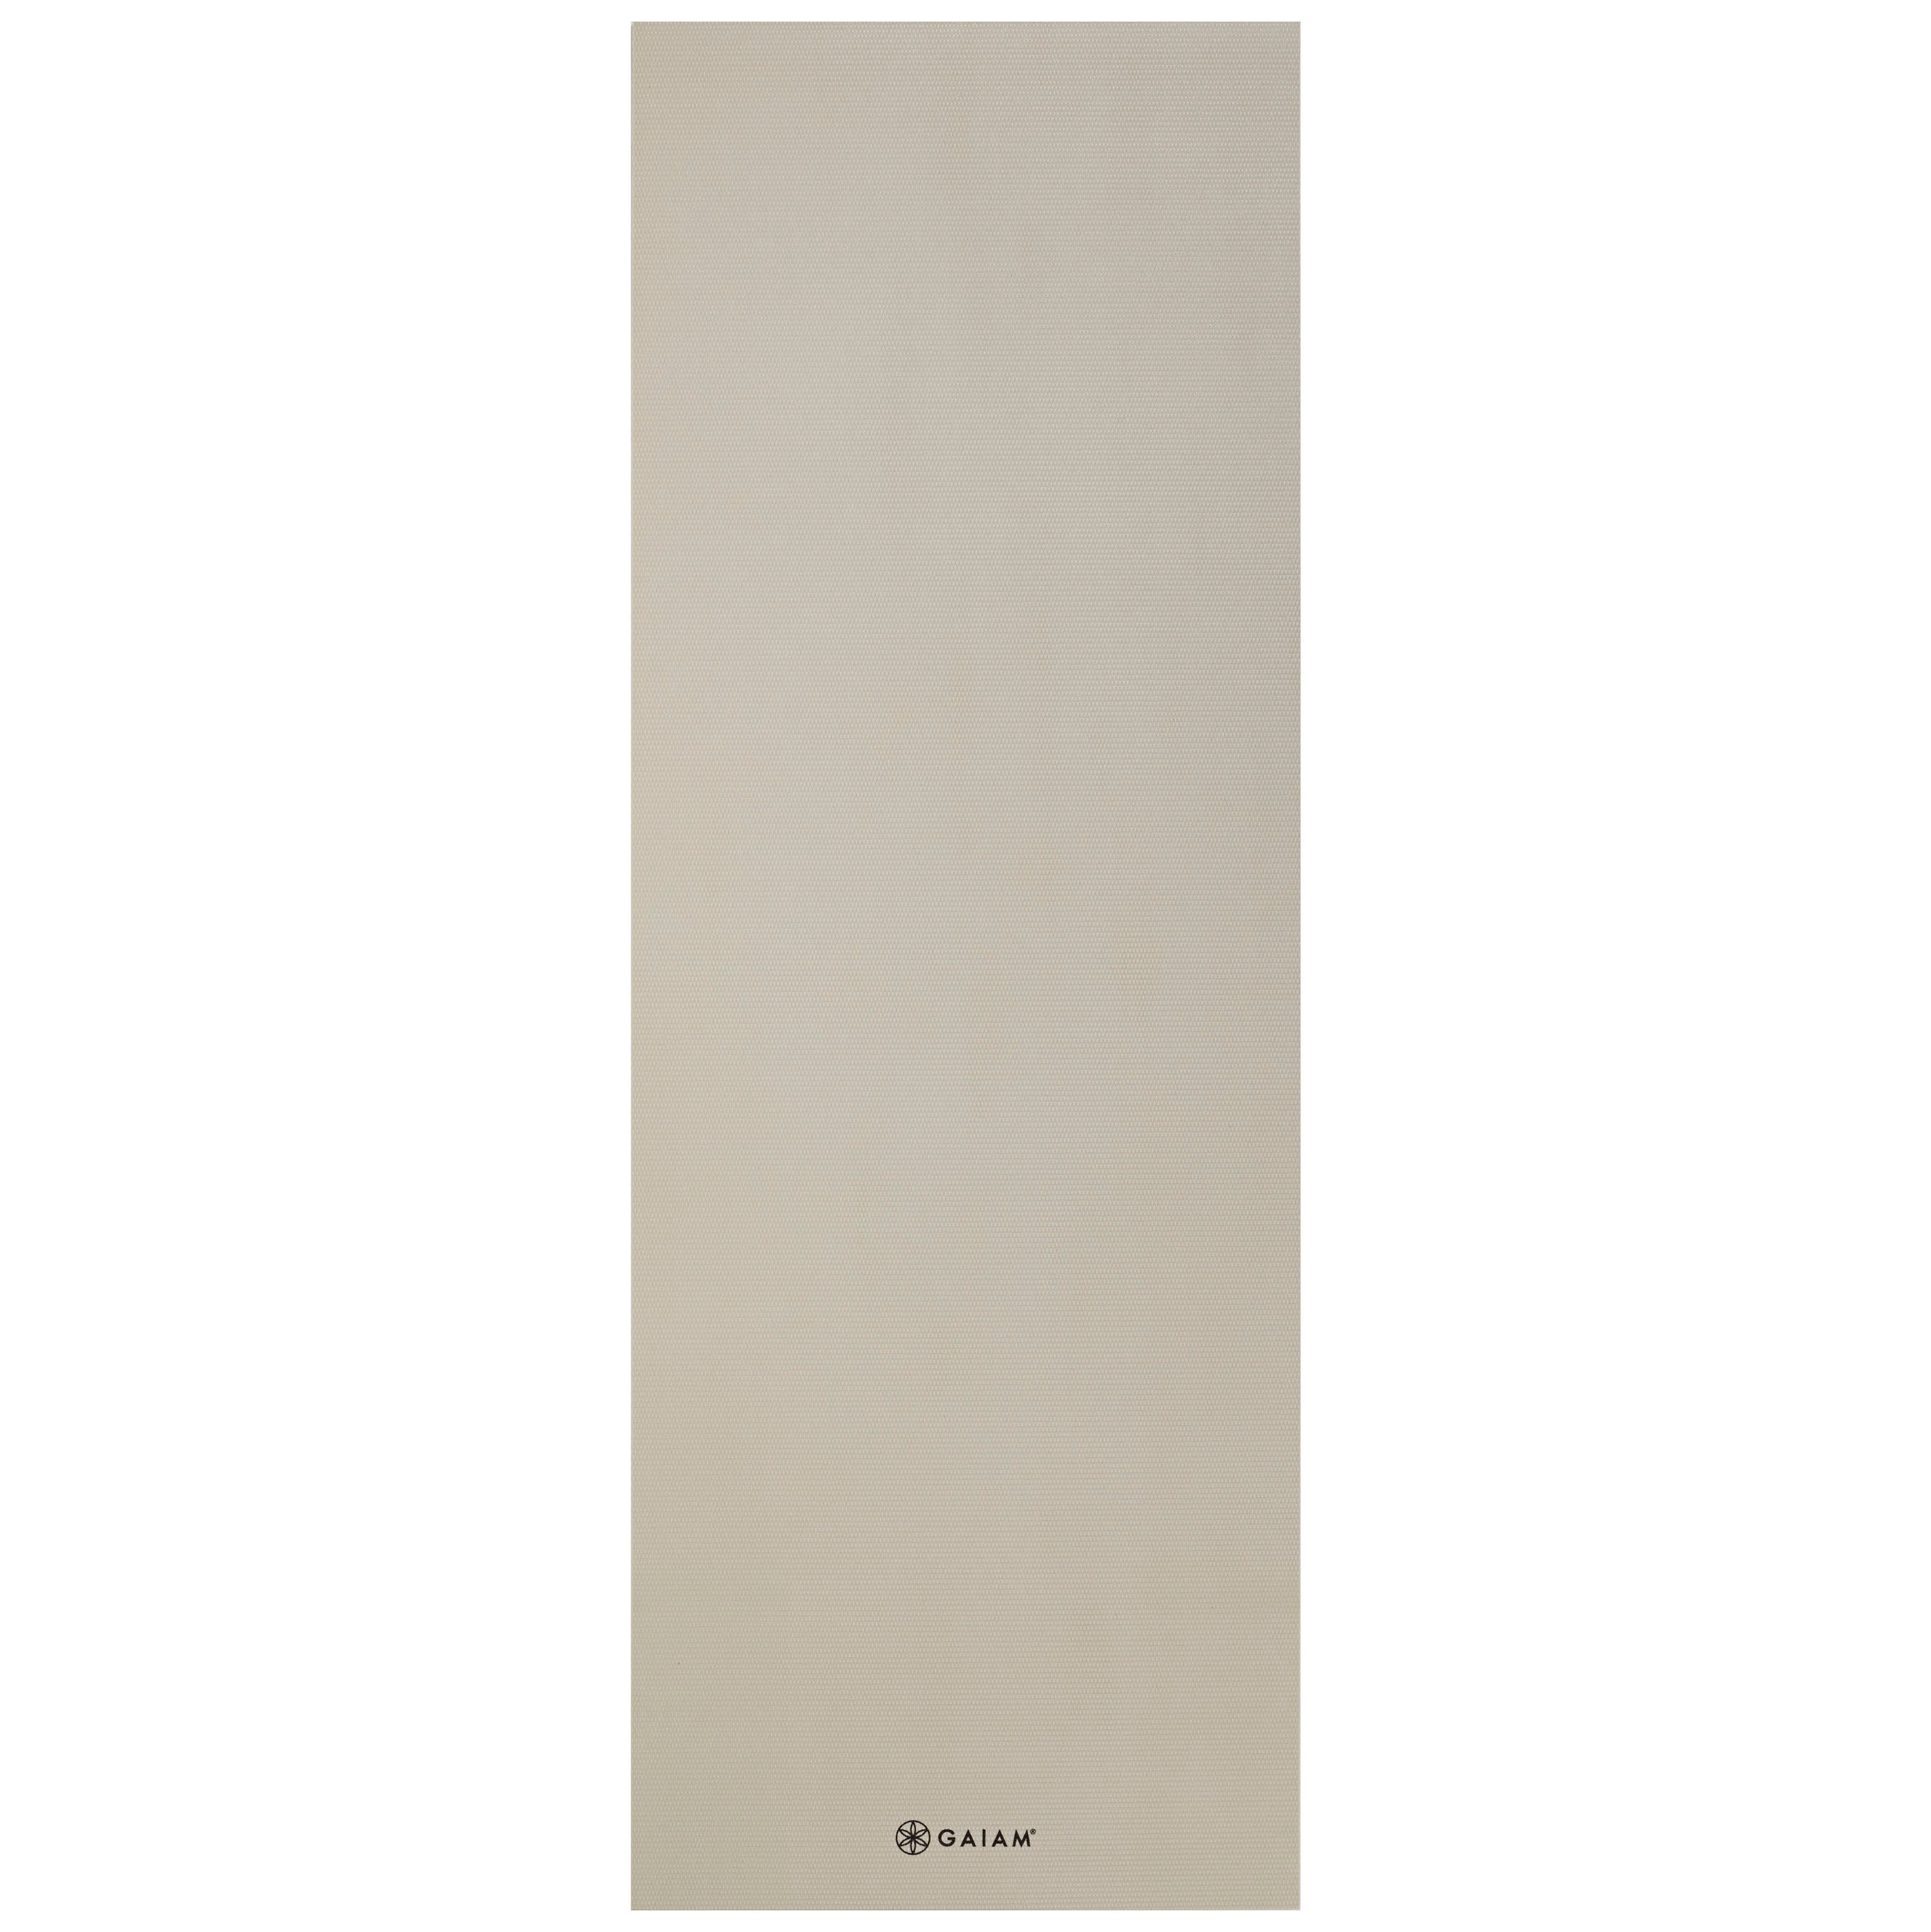 Gaiam Classic Solid Color Yoga Mats (5mm) Sandstone flat